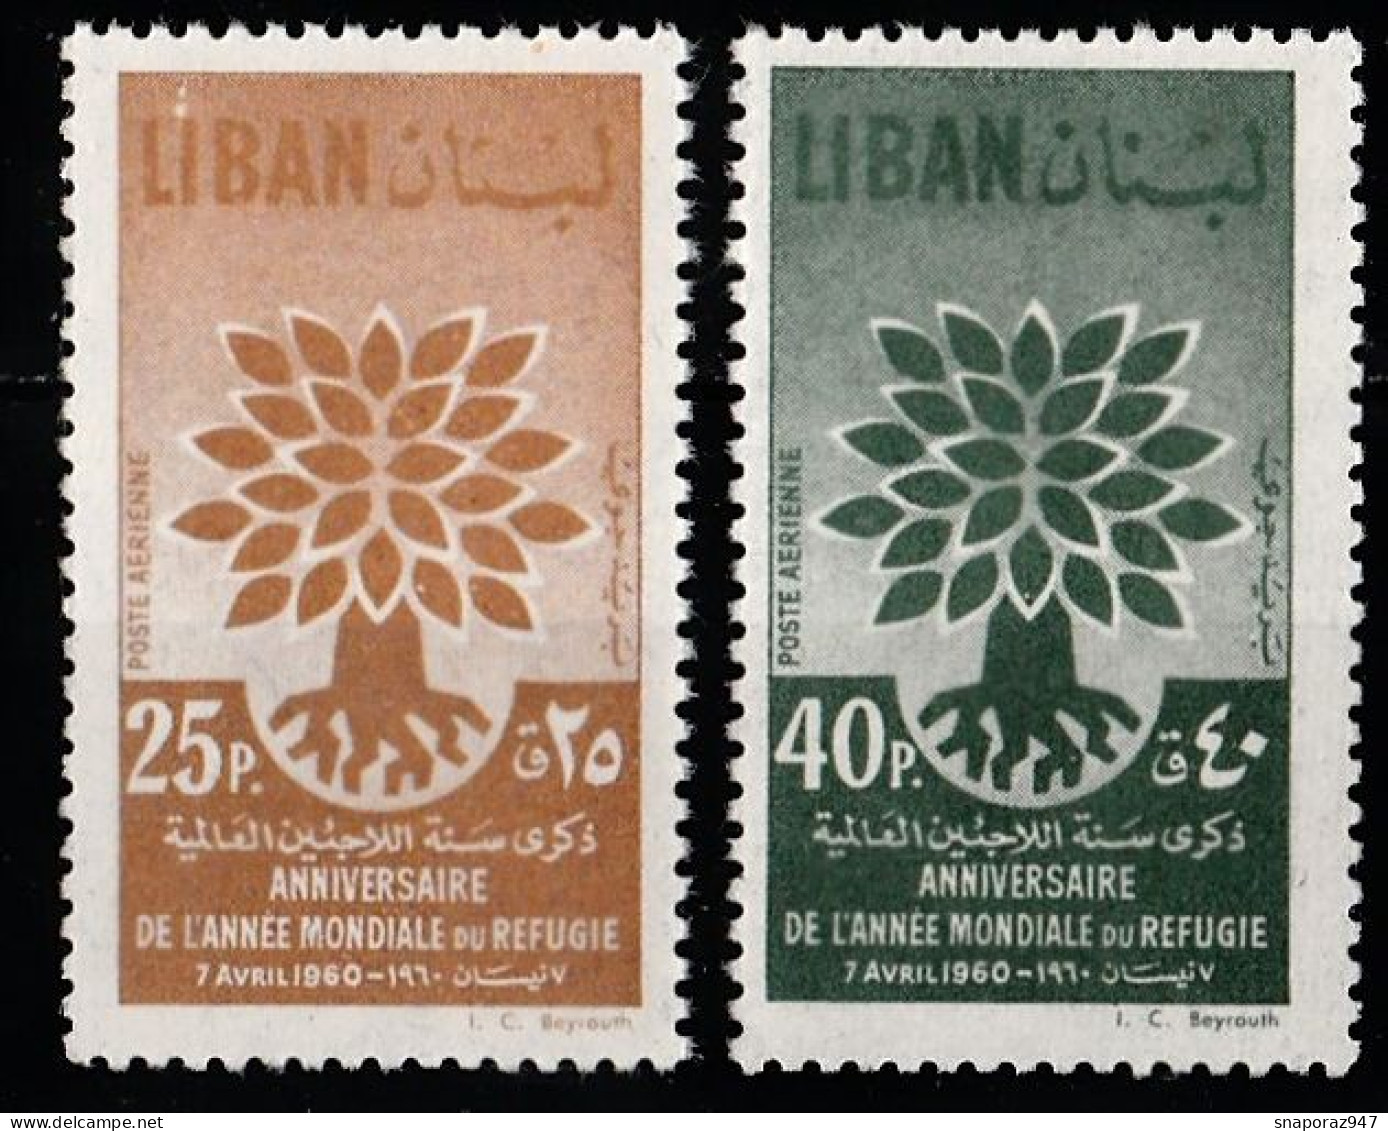 1960 Libano Lebanon World Year Of The Refugee  MNH** - Libano